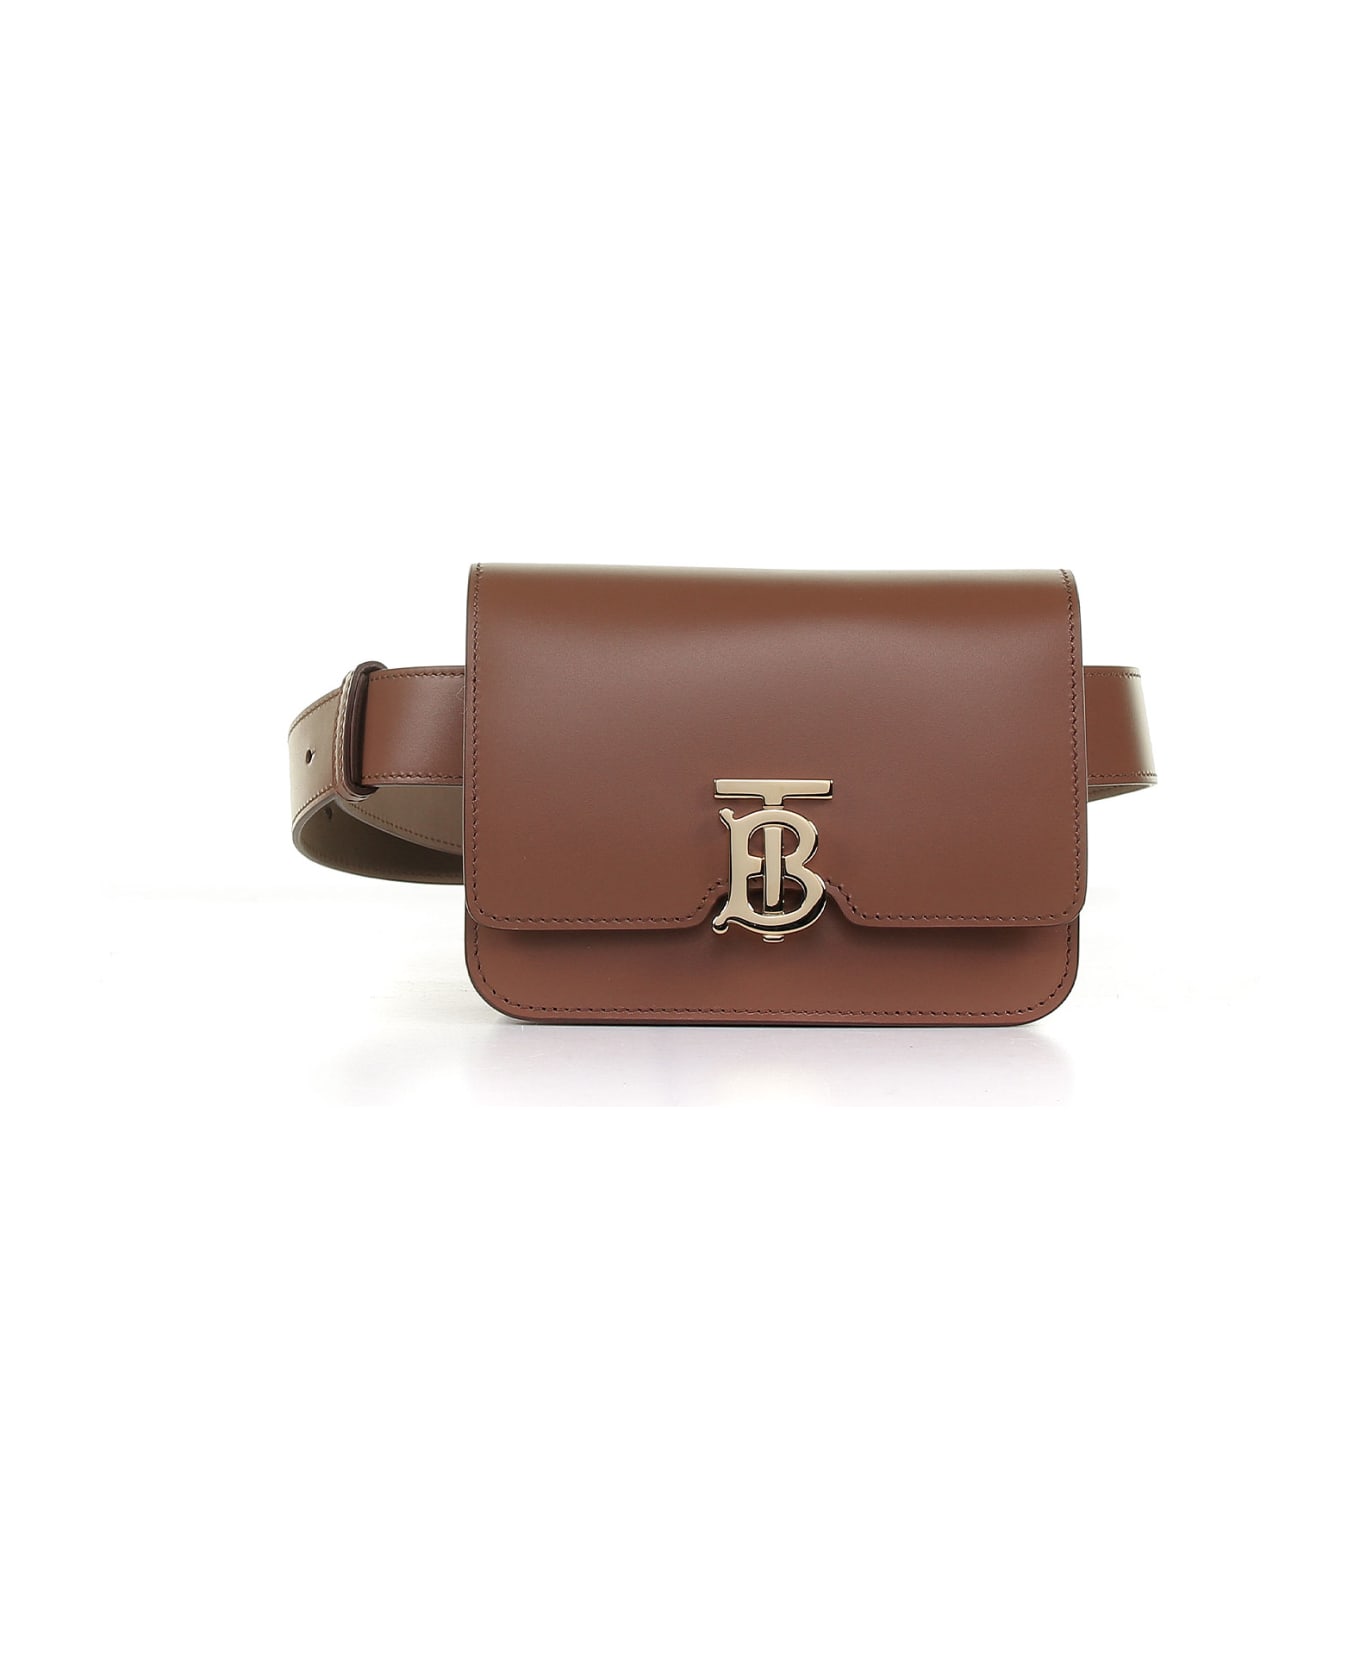 Burberry Malt Brown Tb Leather Bag - MALT BROWN ベルトバッグ